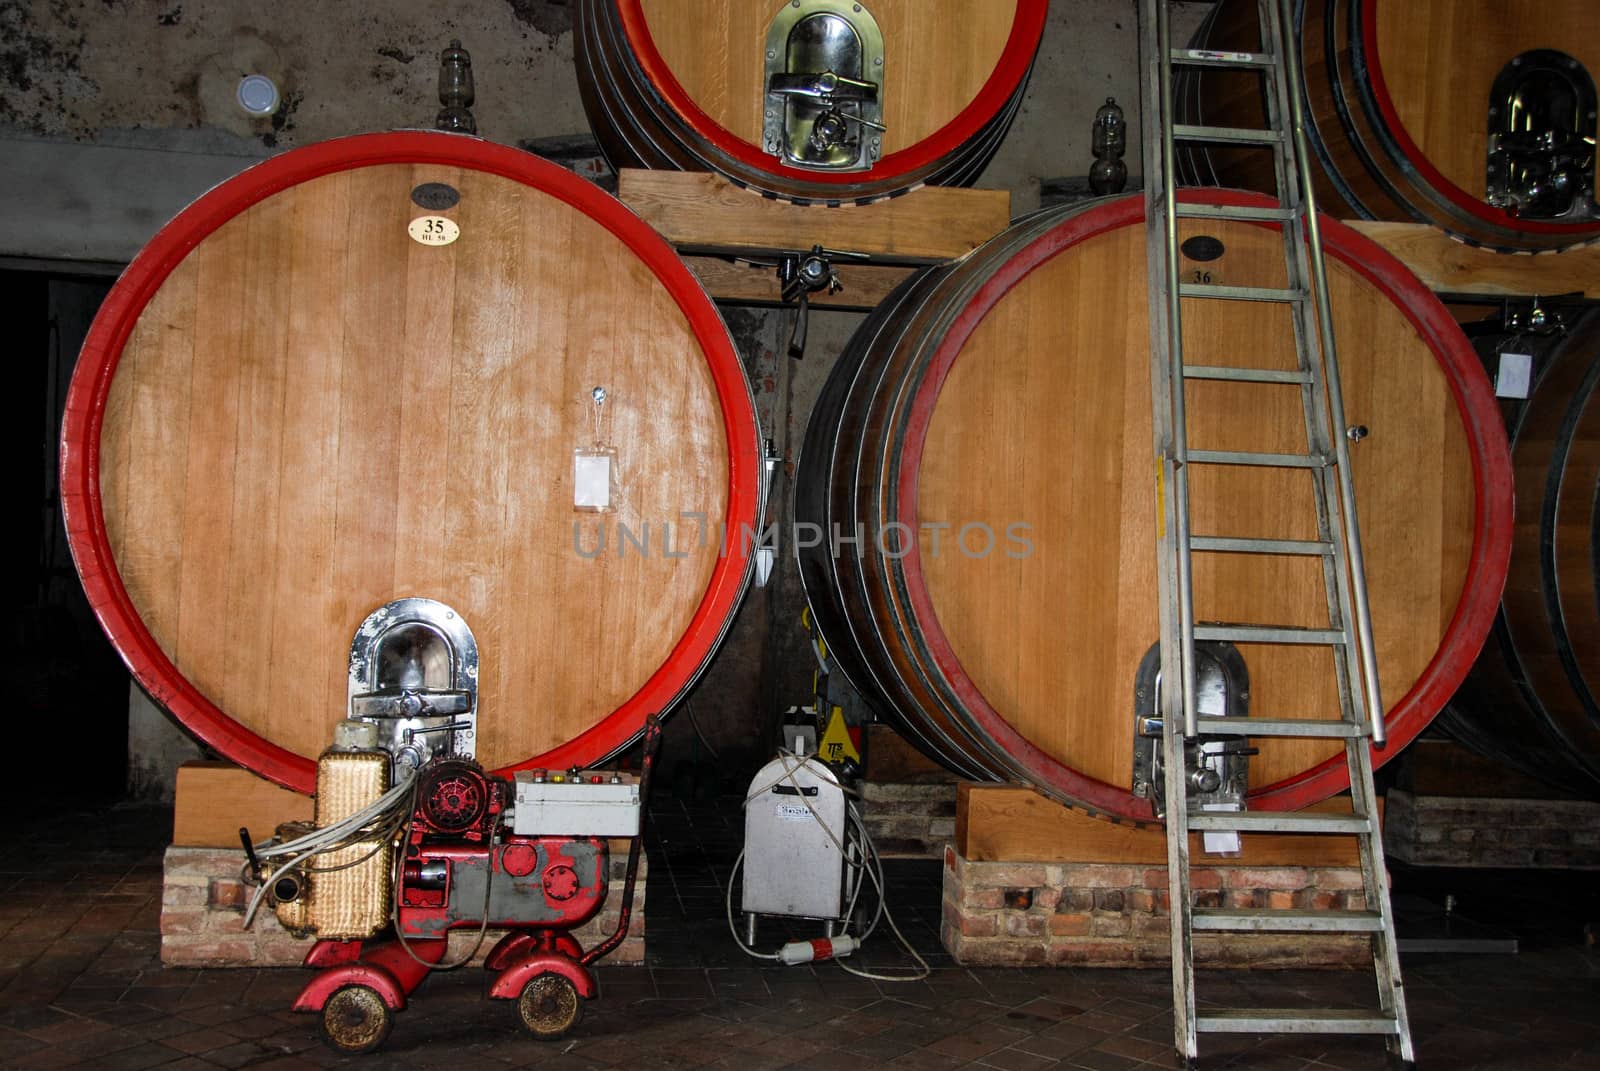 Barrels in a wine cellar by cosca